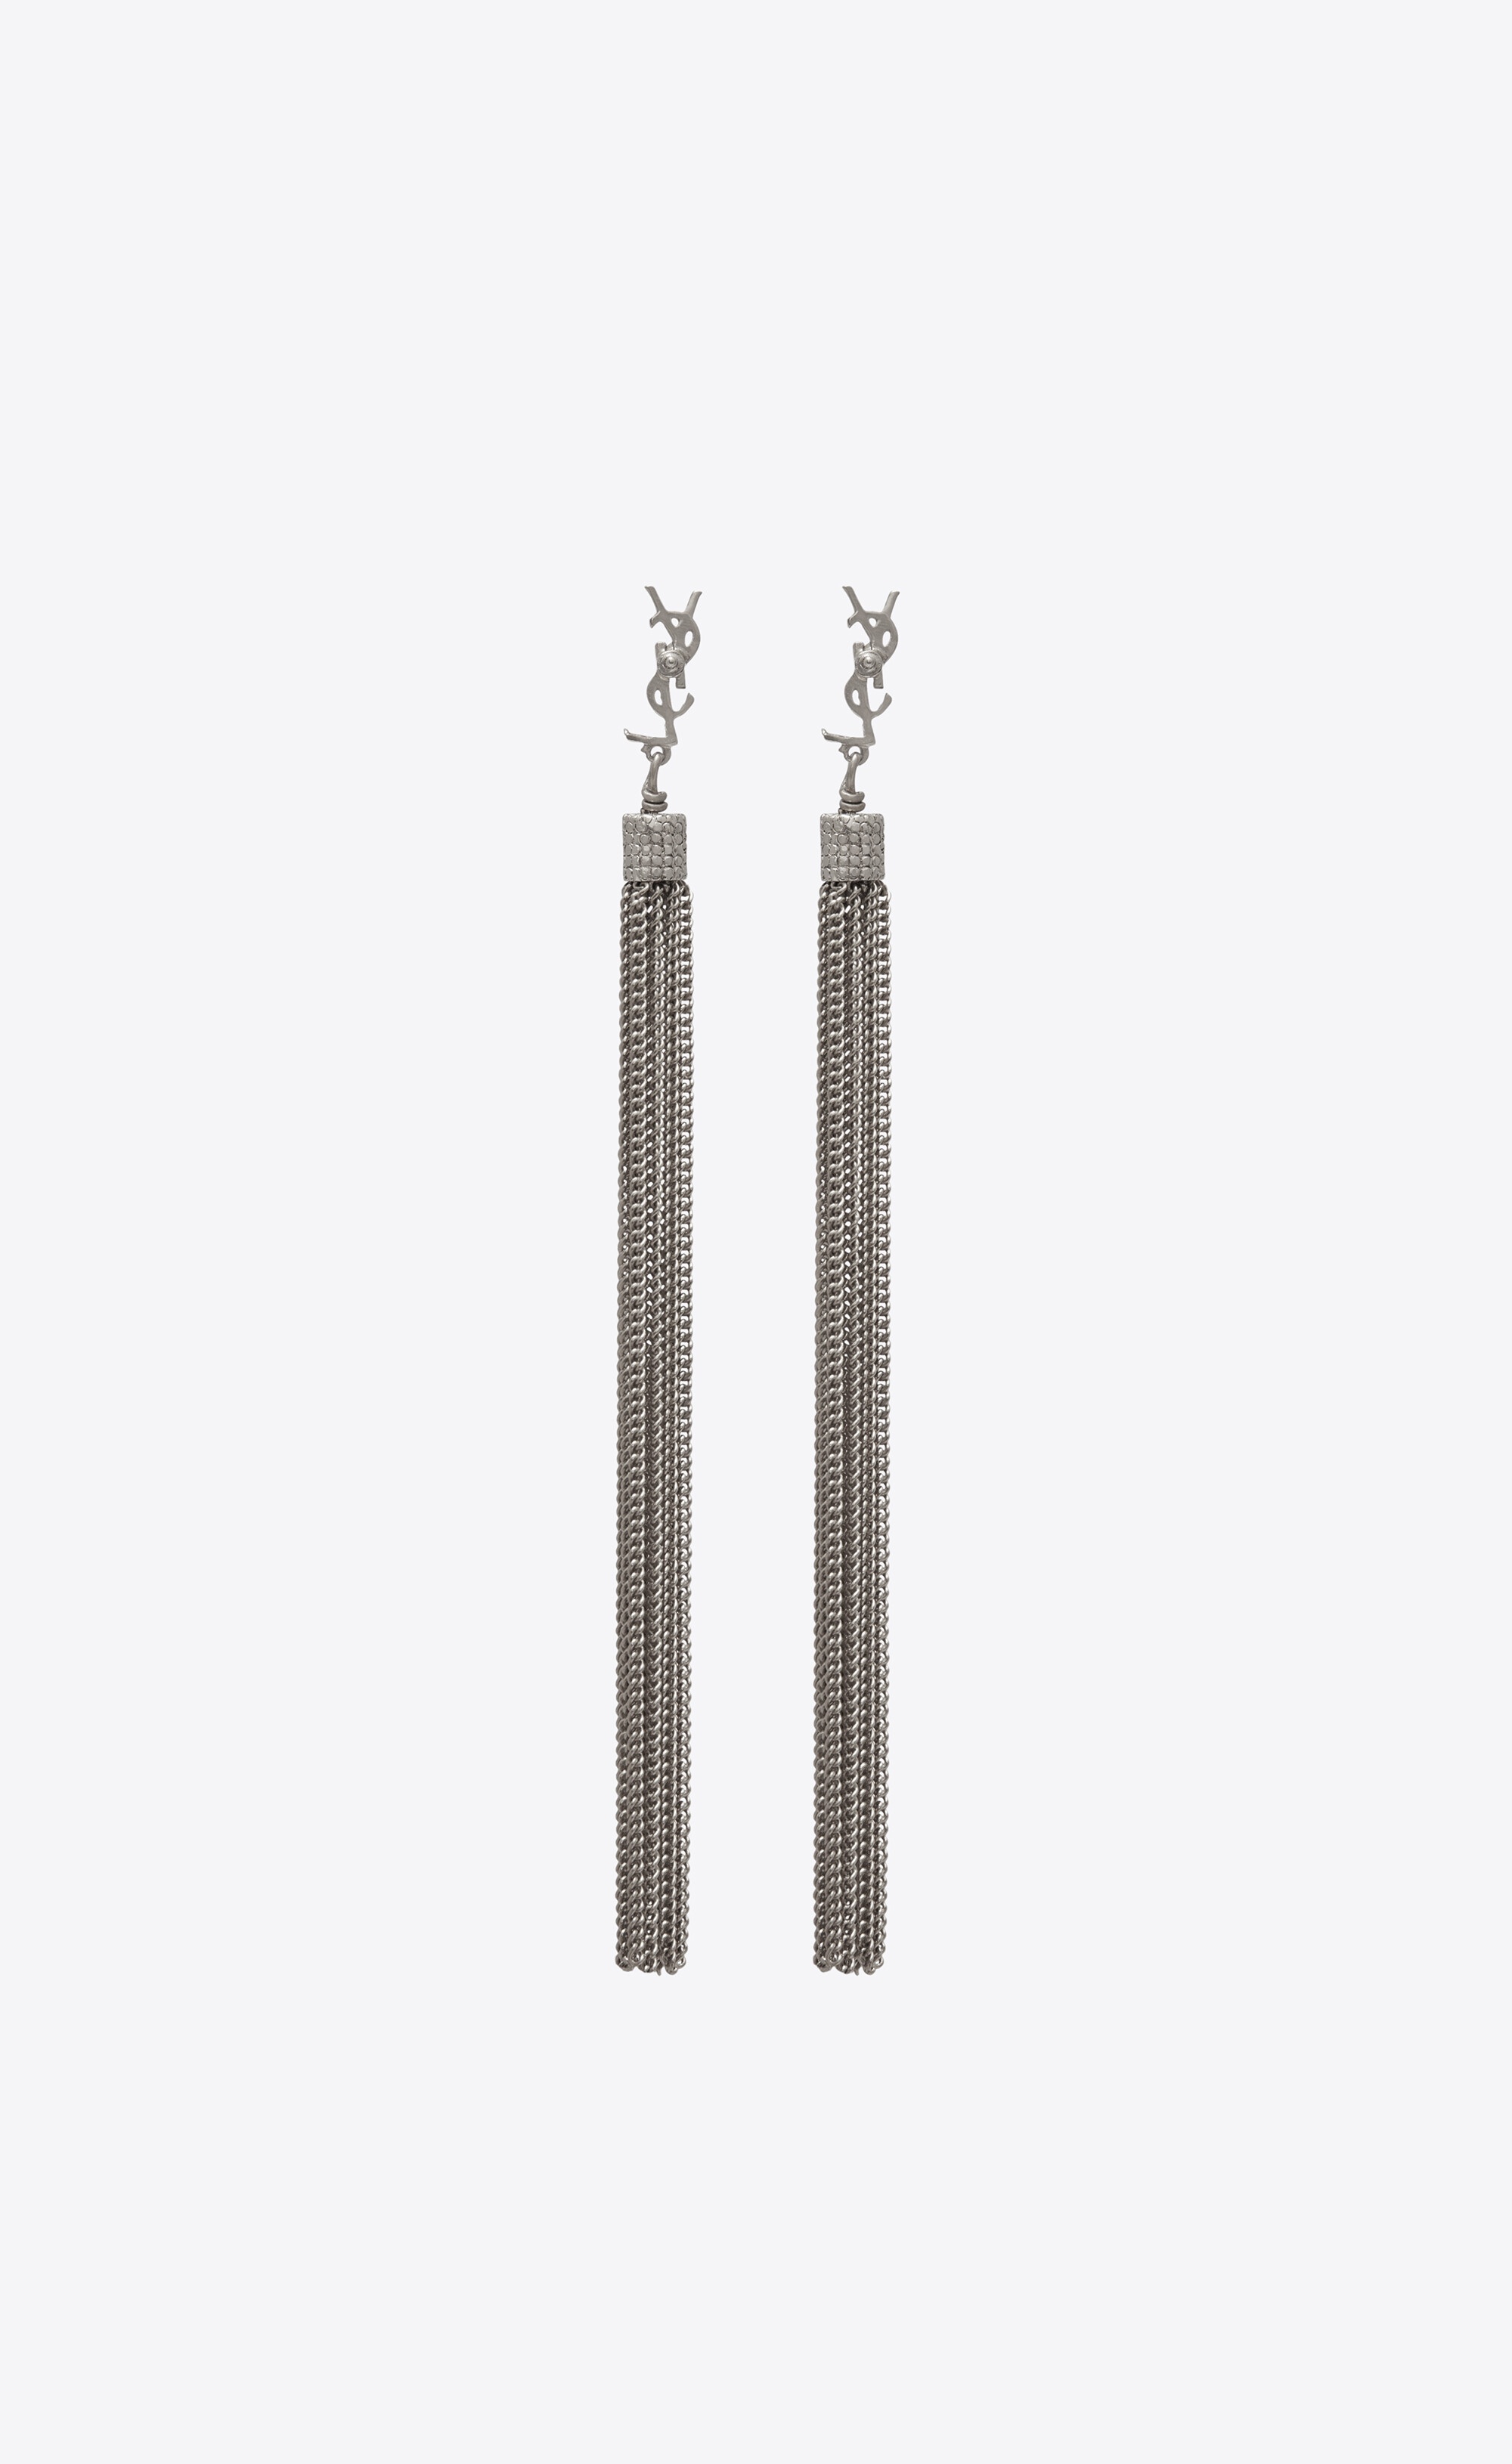 loulou earrings with chain tassels in silver brass - 2